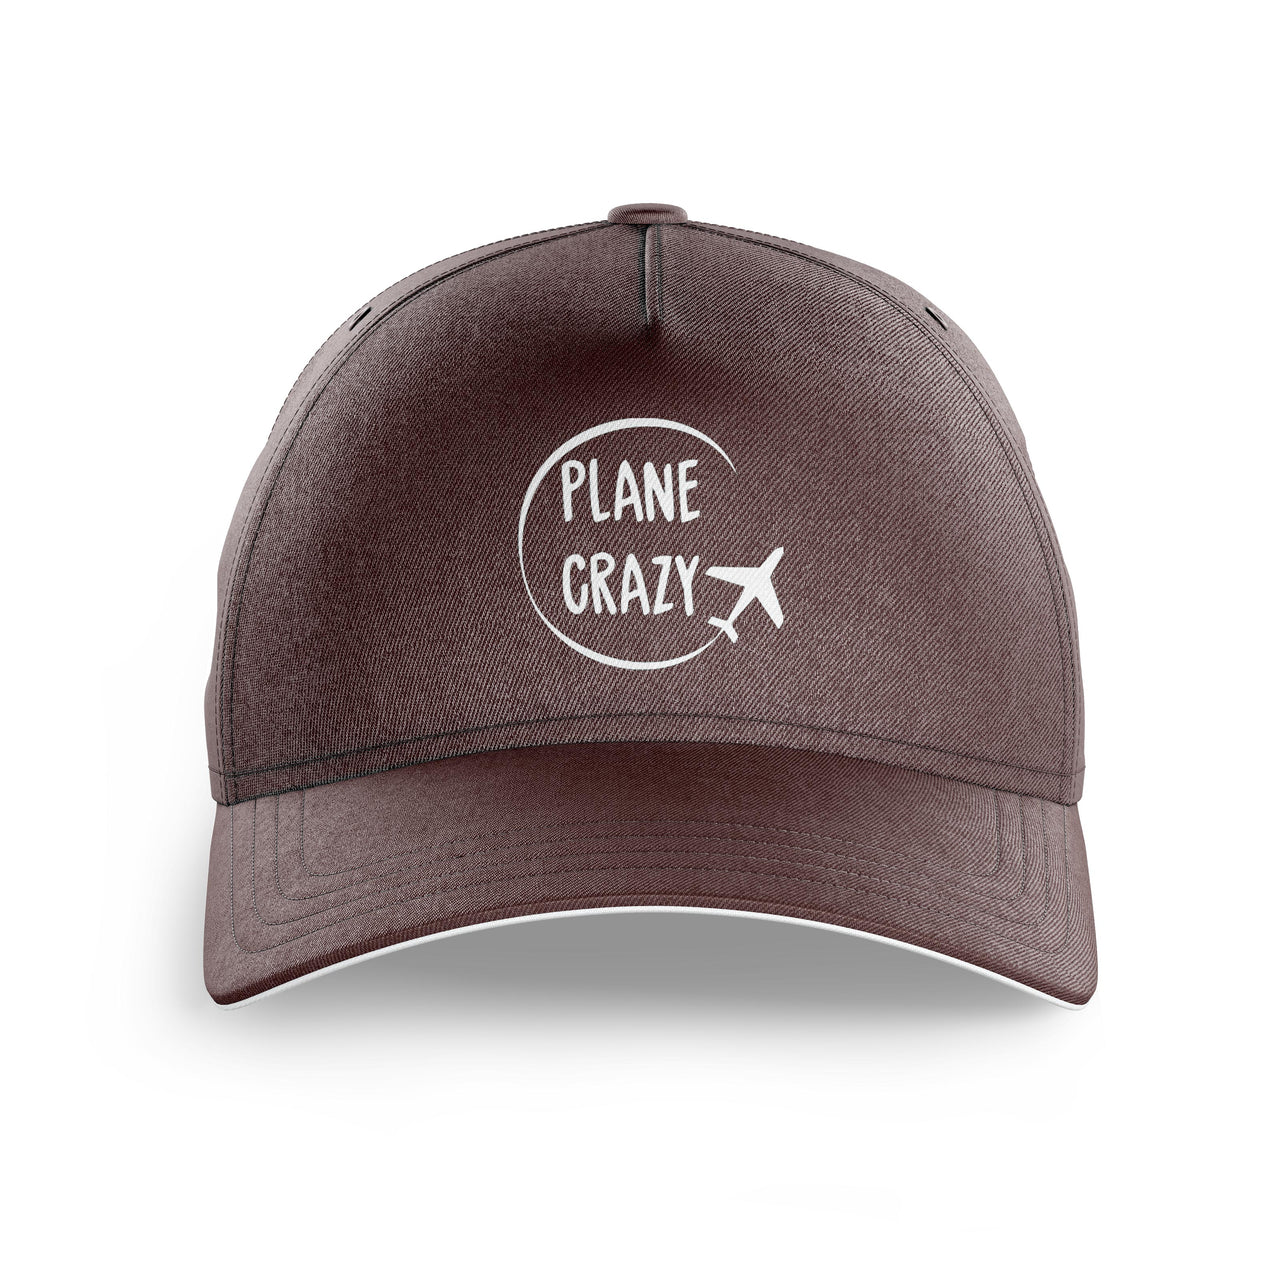 Plane Crazy Printed Hats